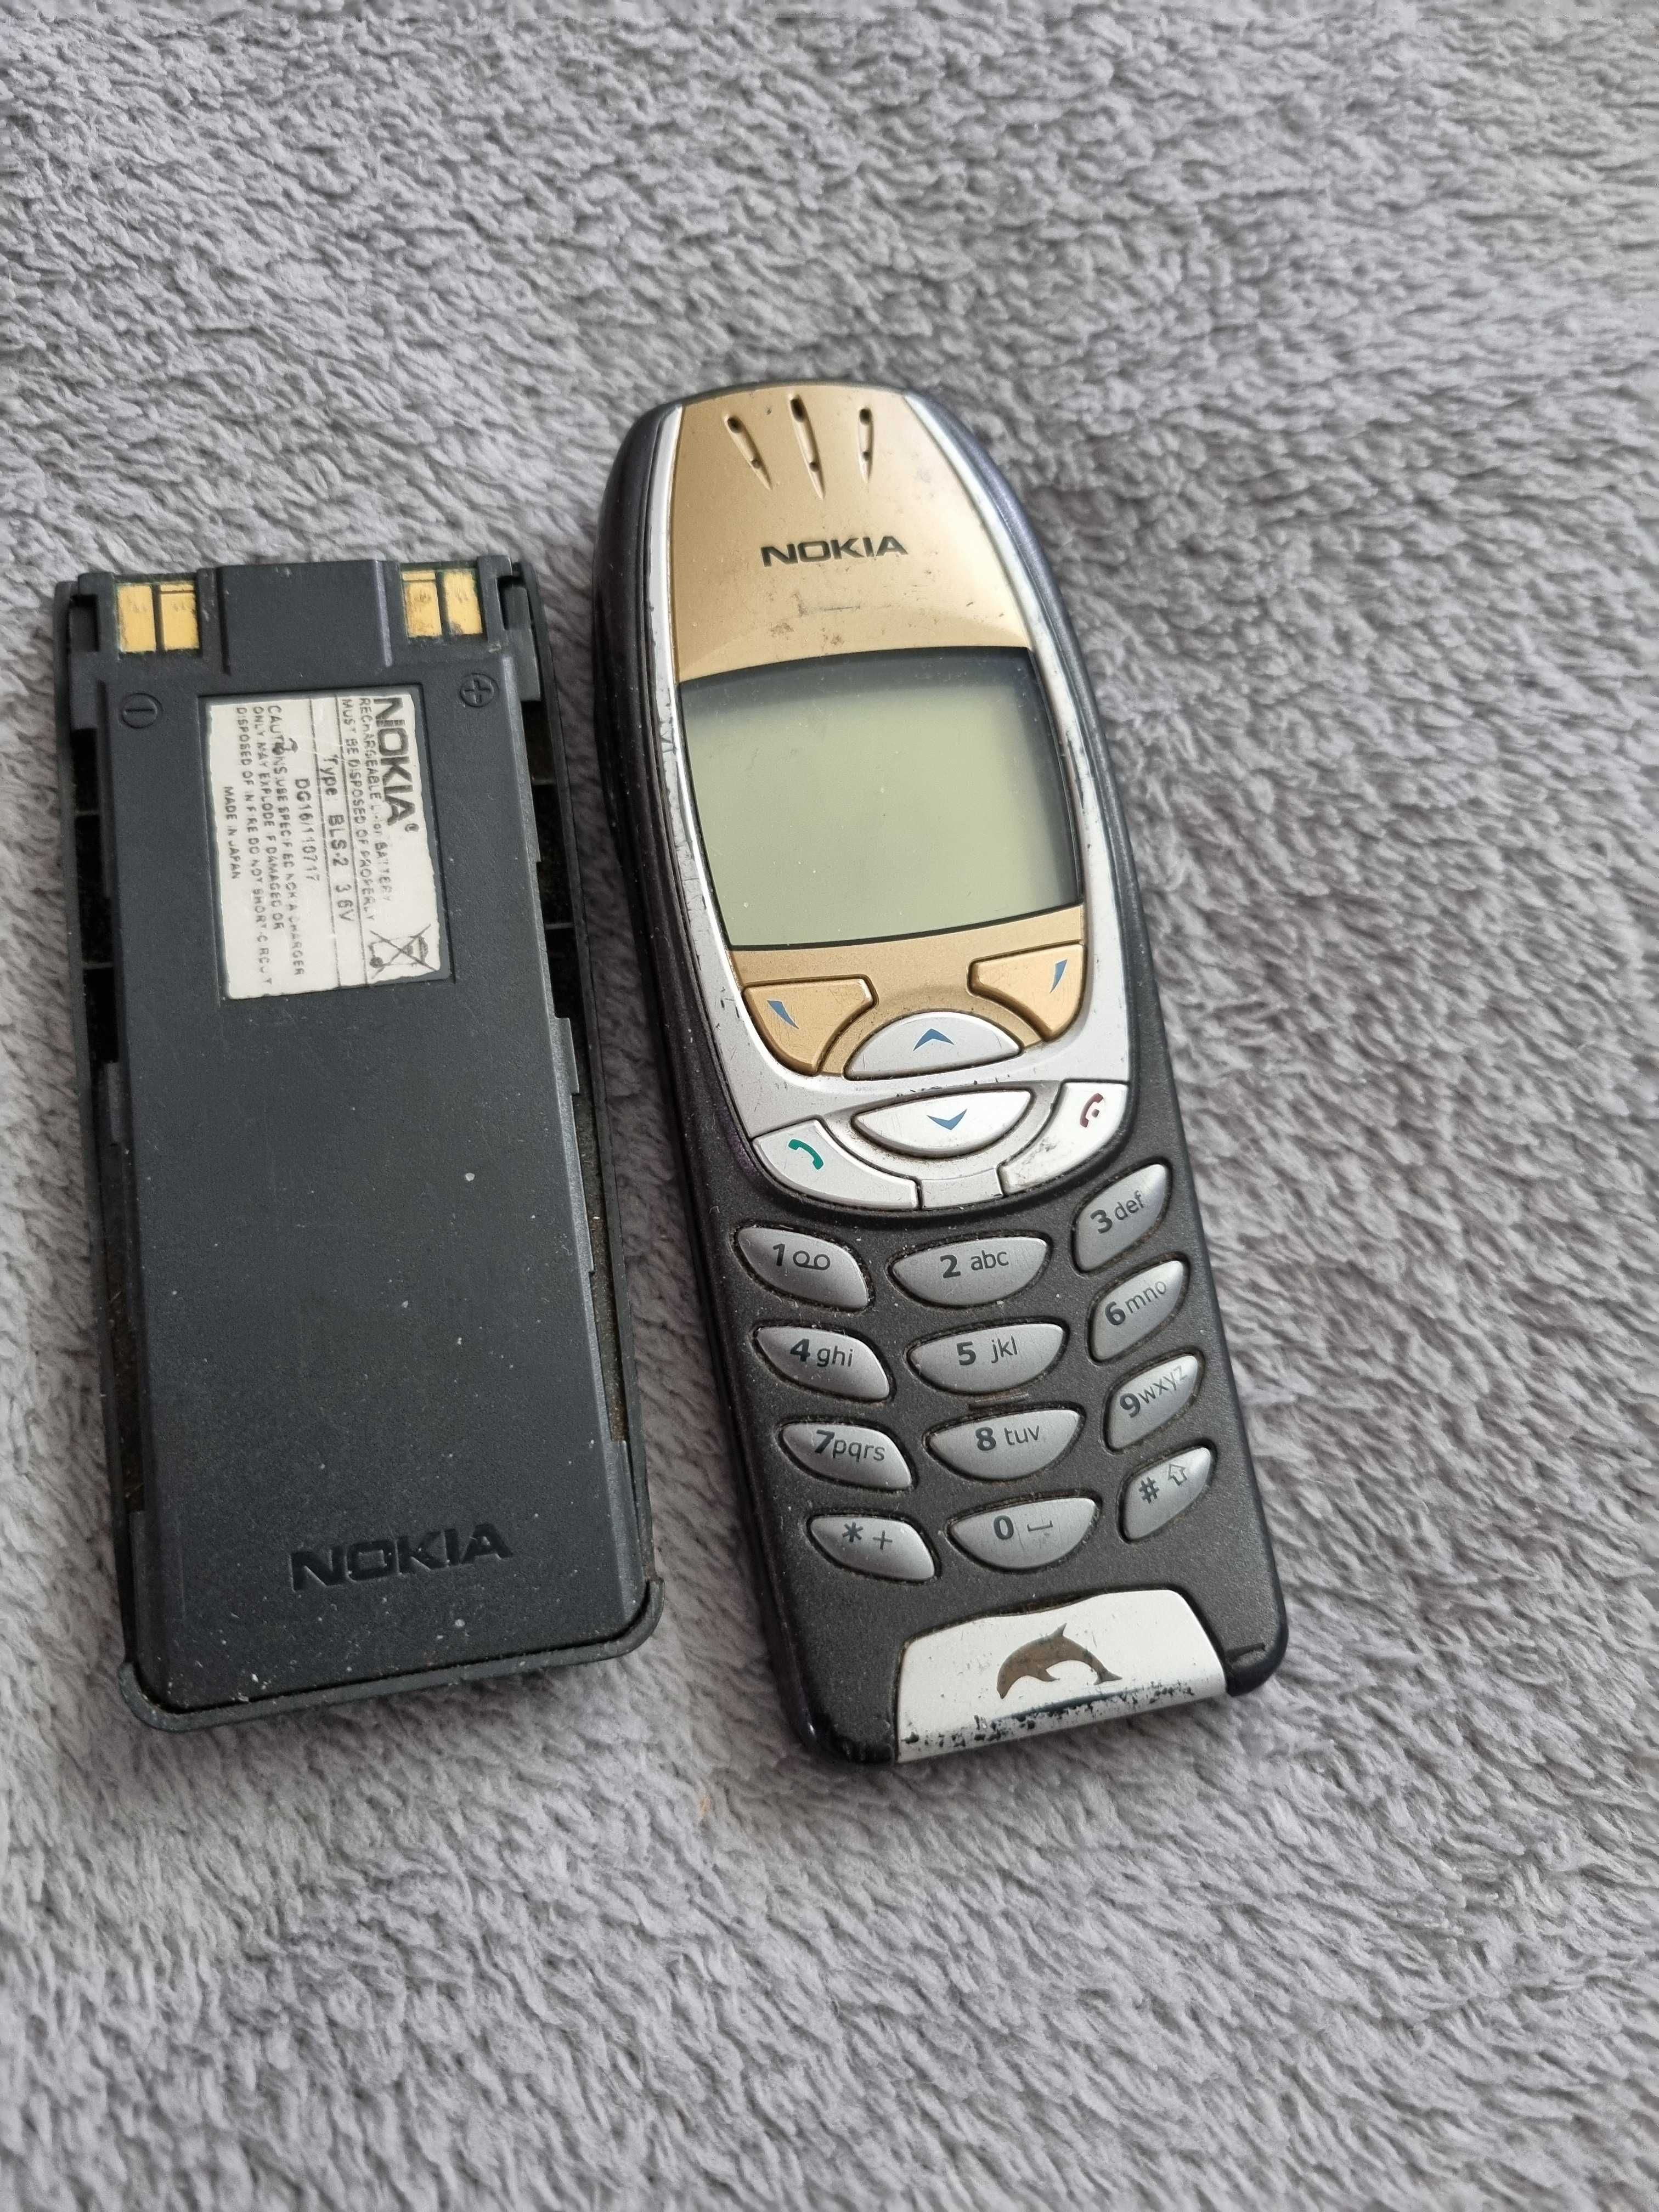 Nokia 6310 i 8310 w oryginale